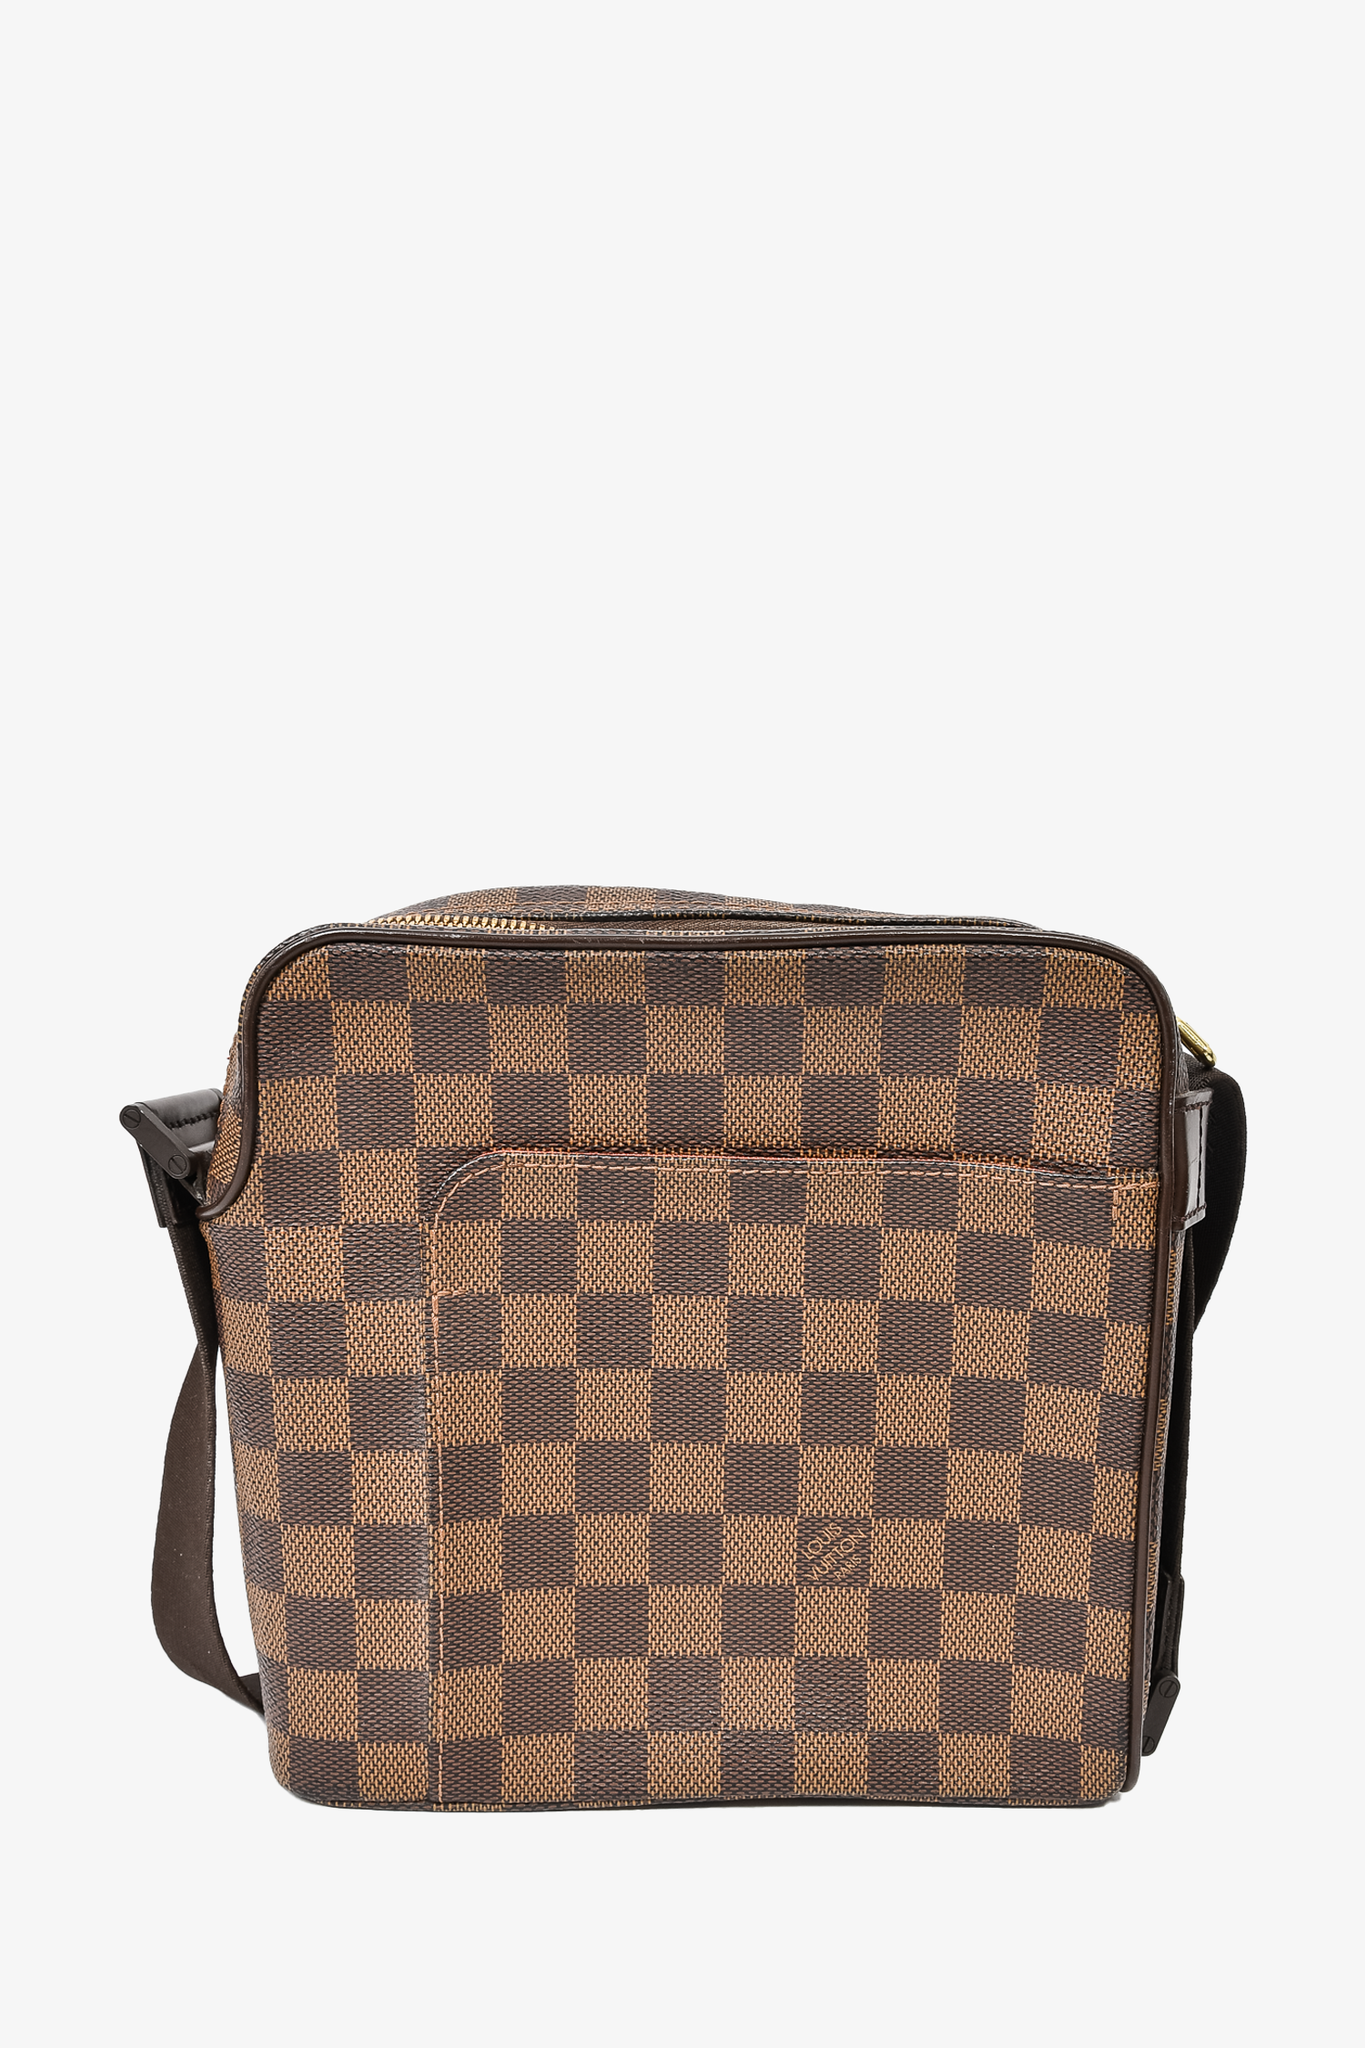 Louis Vuitton Saintonge Handbag Monogram Canvas with Leather Brown 2195481